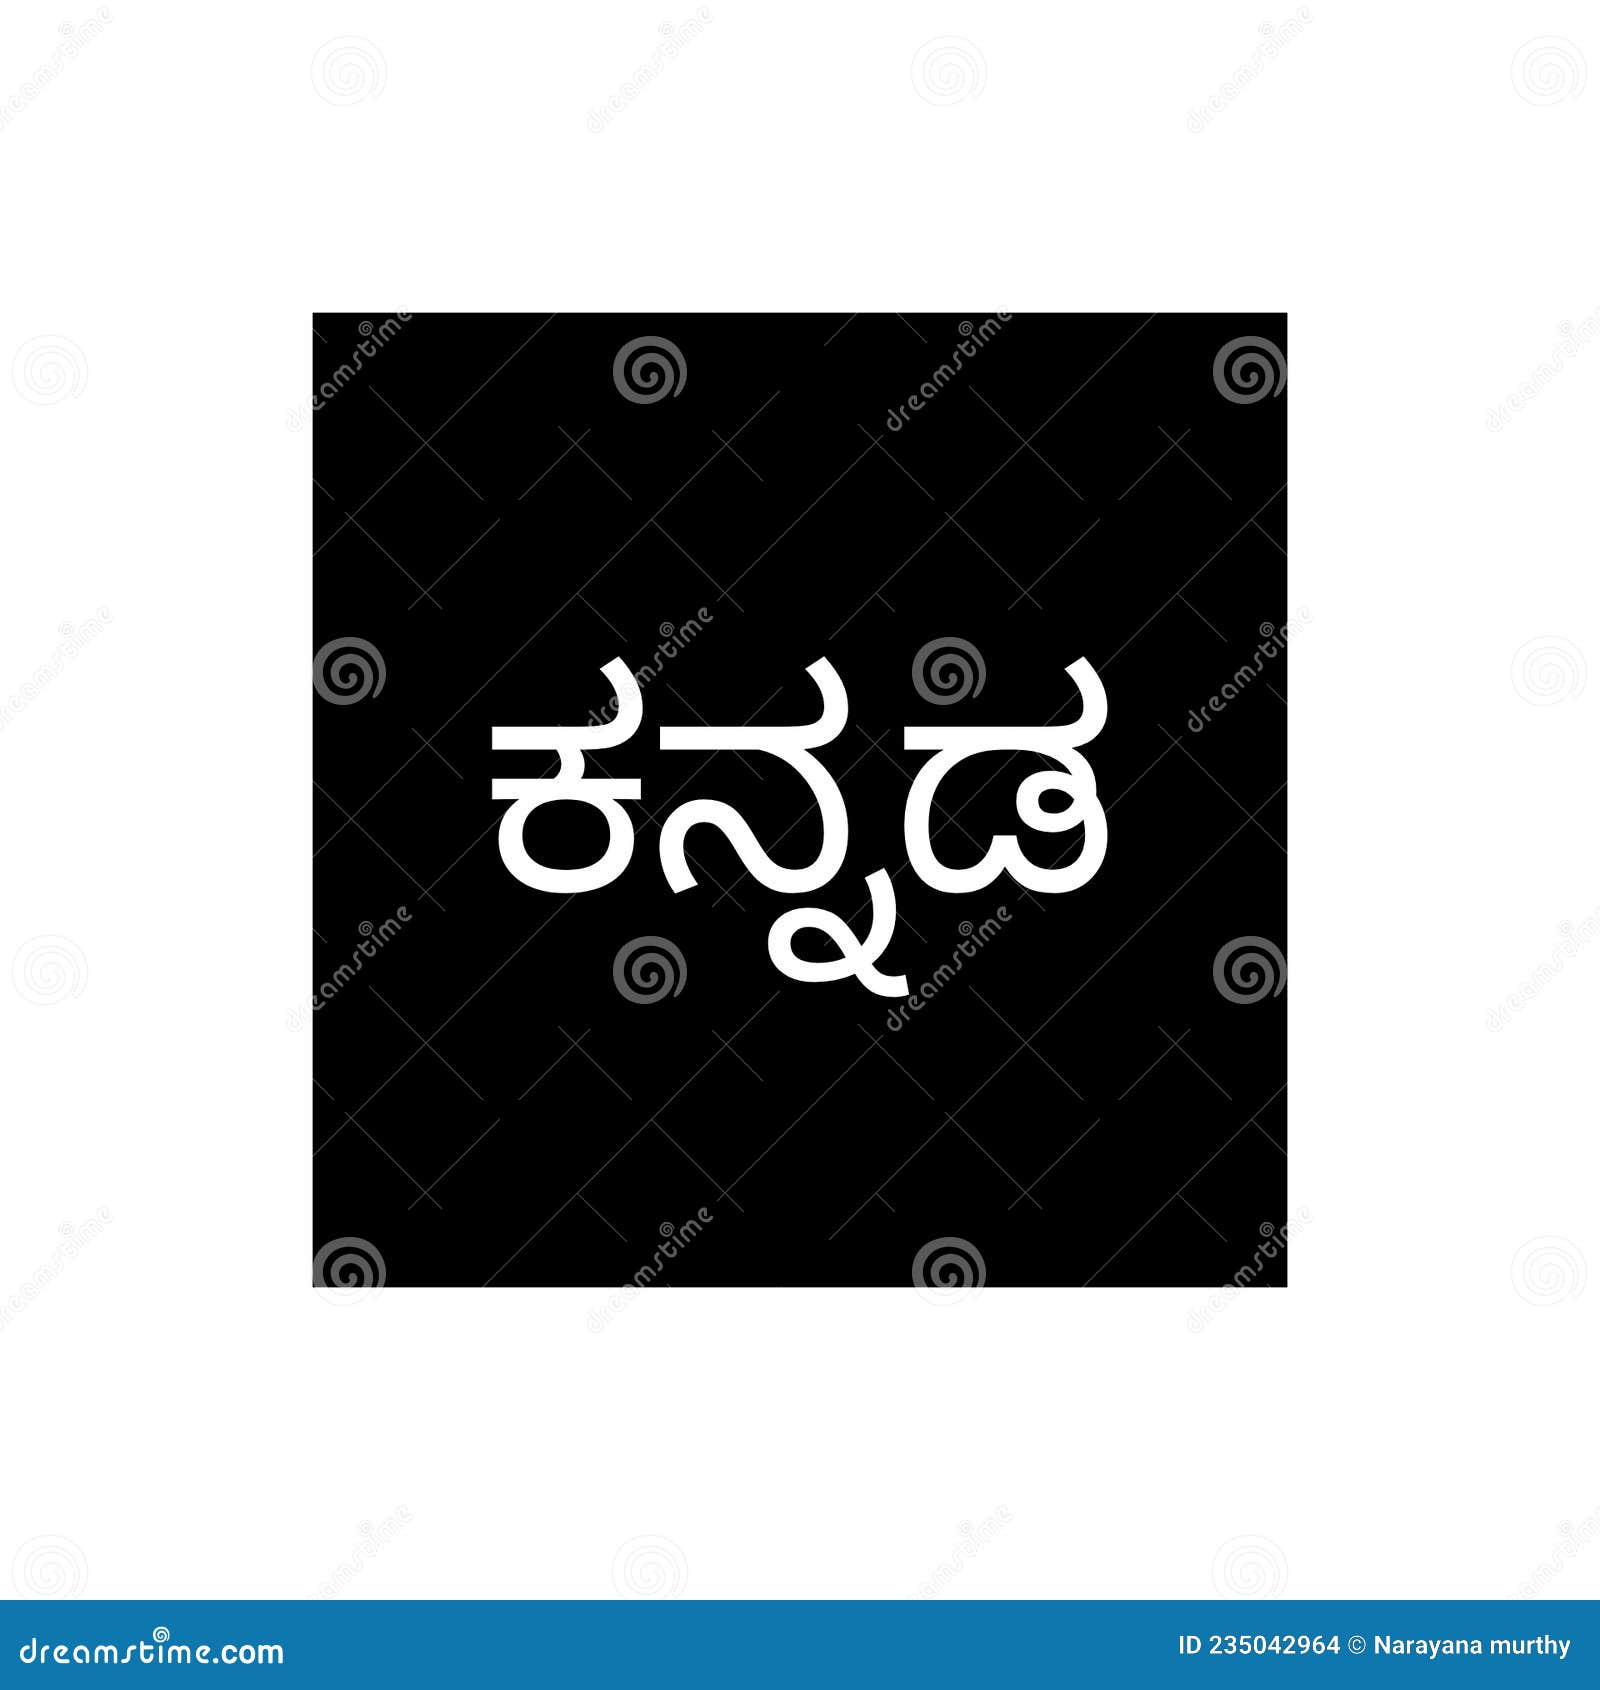 Kannada logo picture stock illustration. Illustration of logo - 235042964